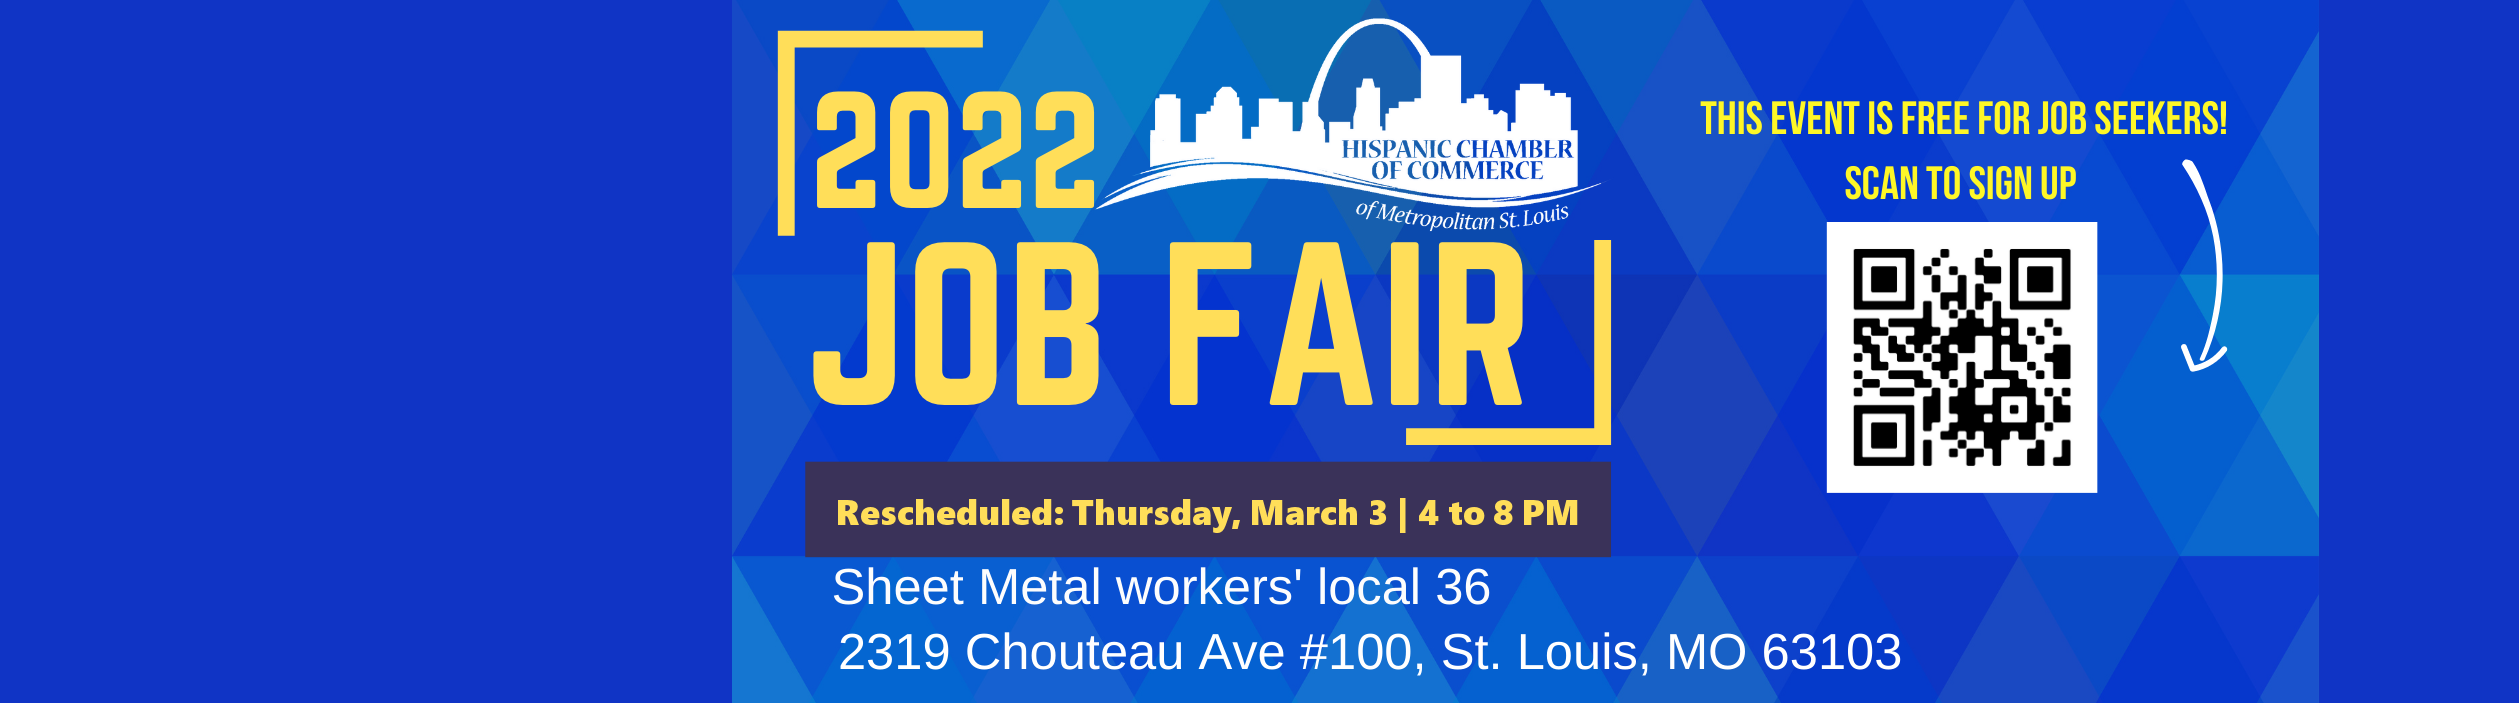 Hispanic Chamber of Commerce of Metropolitan St. Louis Job Fair, Thursday, March 3rd, 2022 Banner